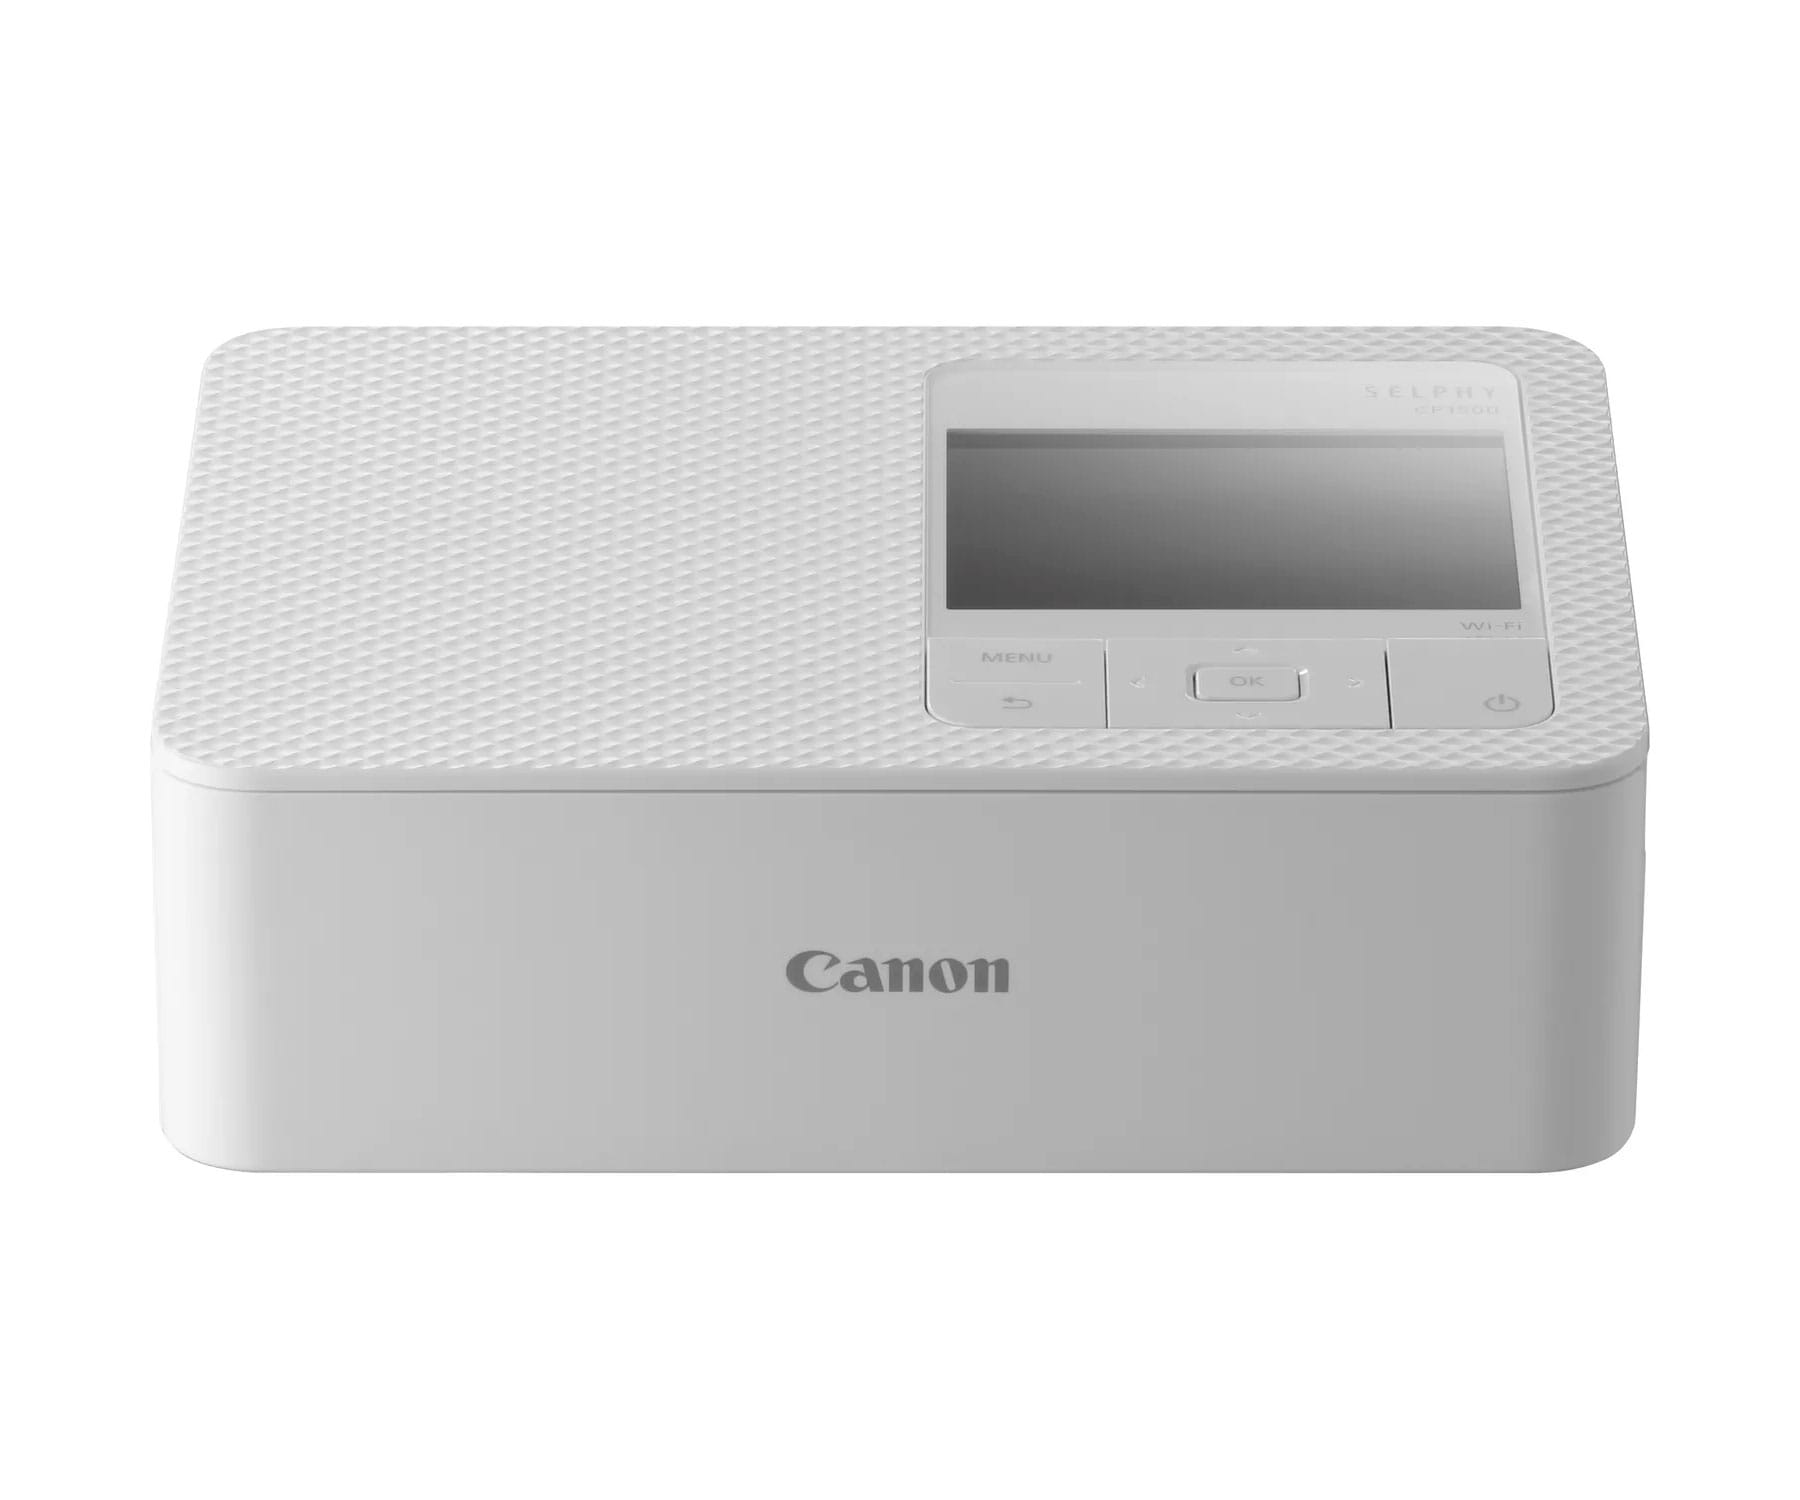 Canon Selphy CP1500 White / Impresora fotográfica